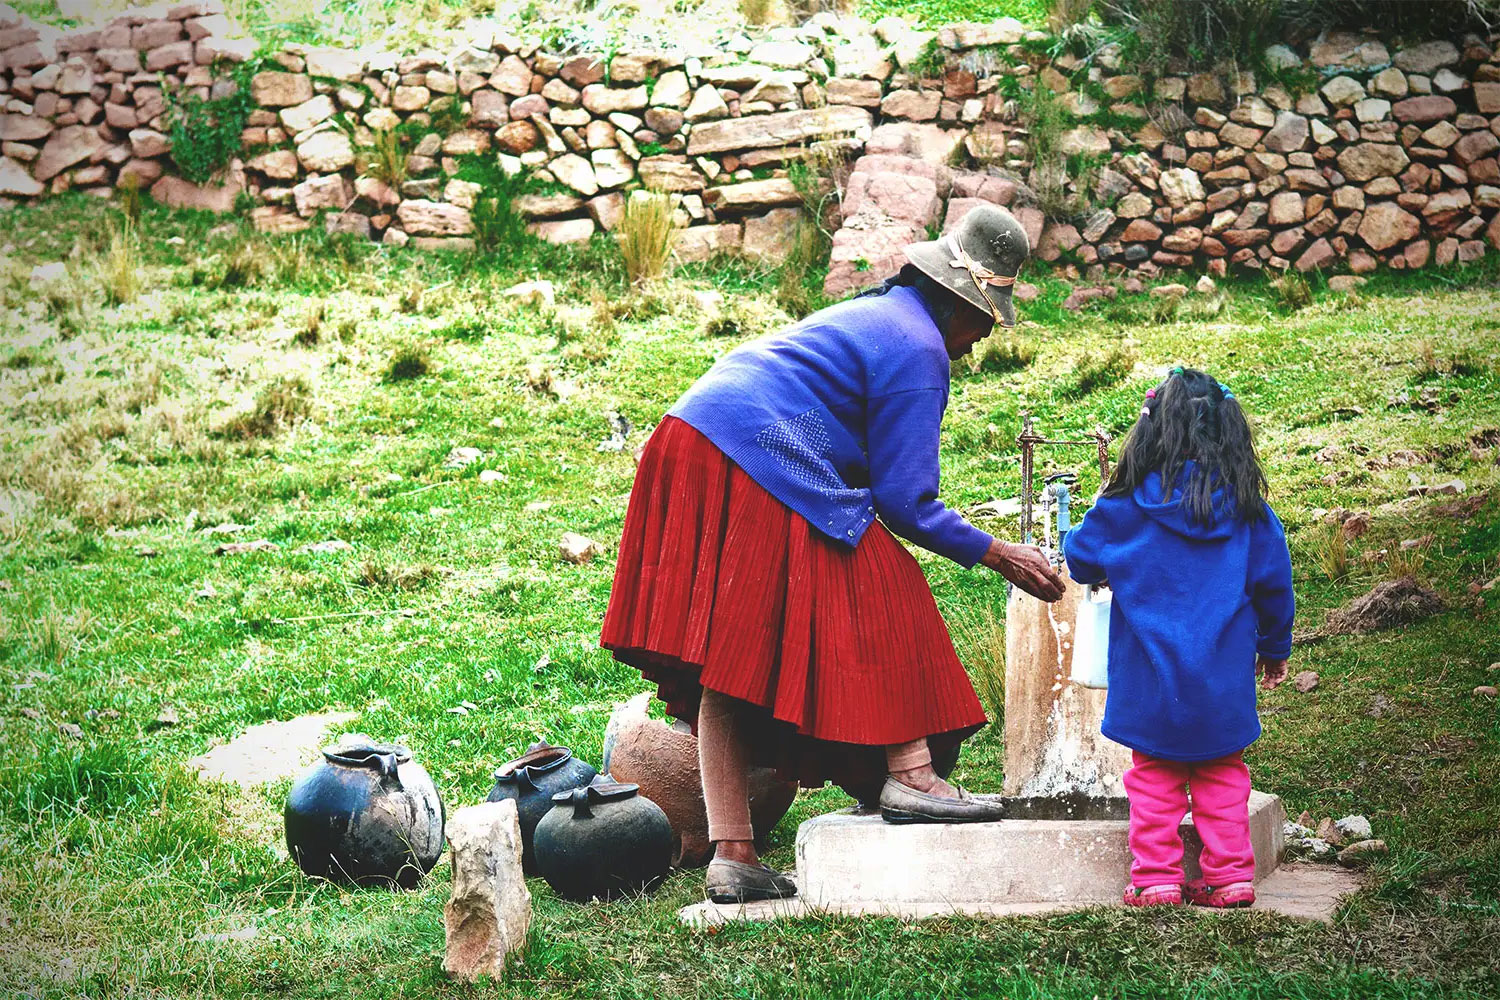 Daily filling of jugs from communal tap in rural Peru.